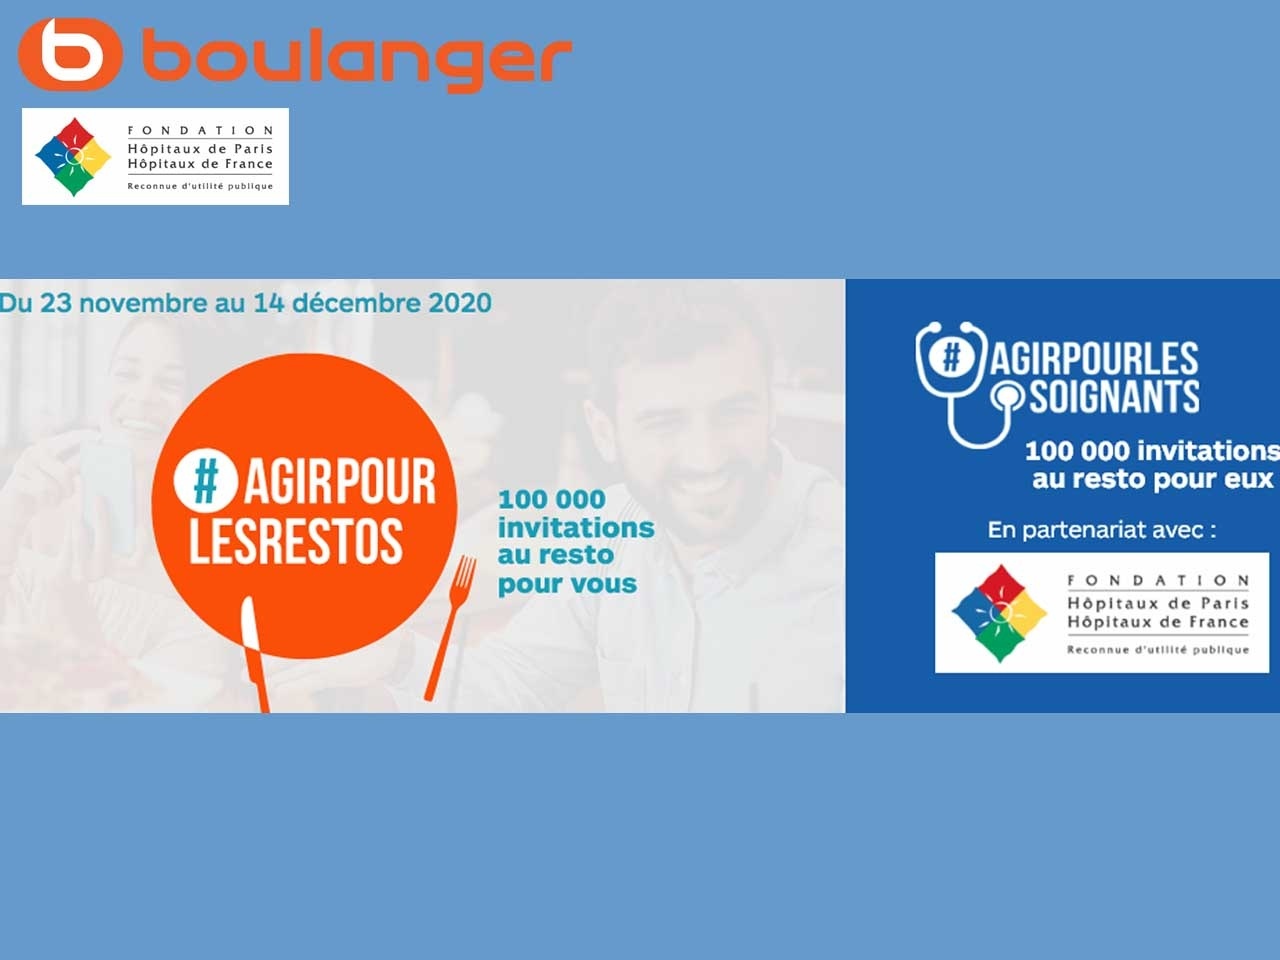 Boulanger lance 2 opérations : #AGIRPOURLESRESTOS & #AGIRPOURLESSOIGNANTS